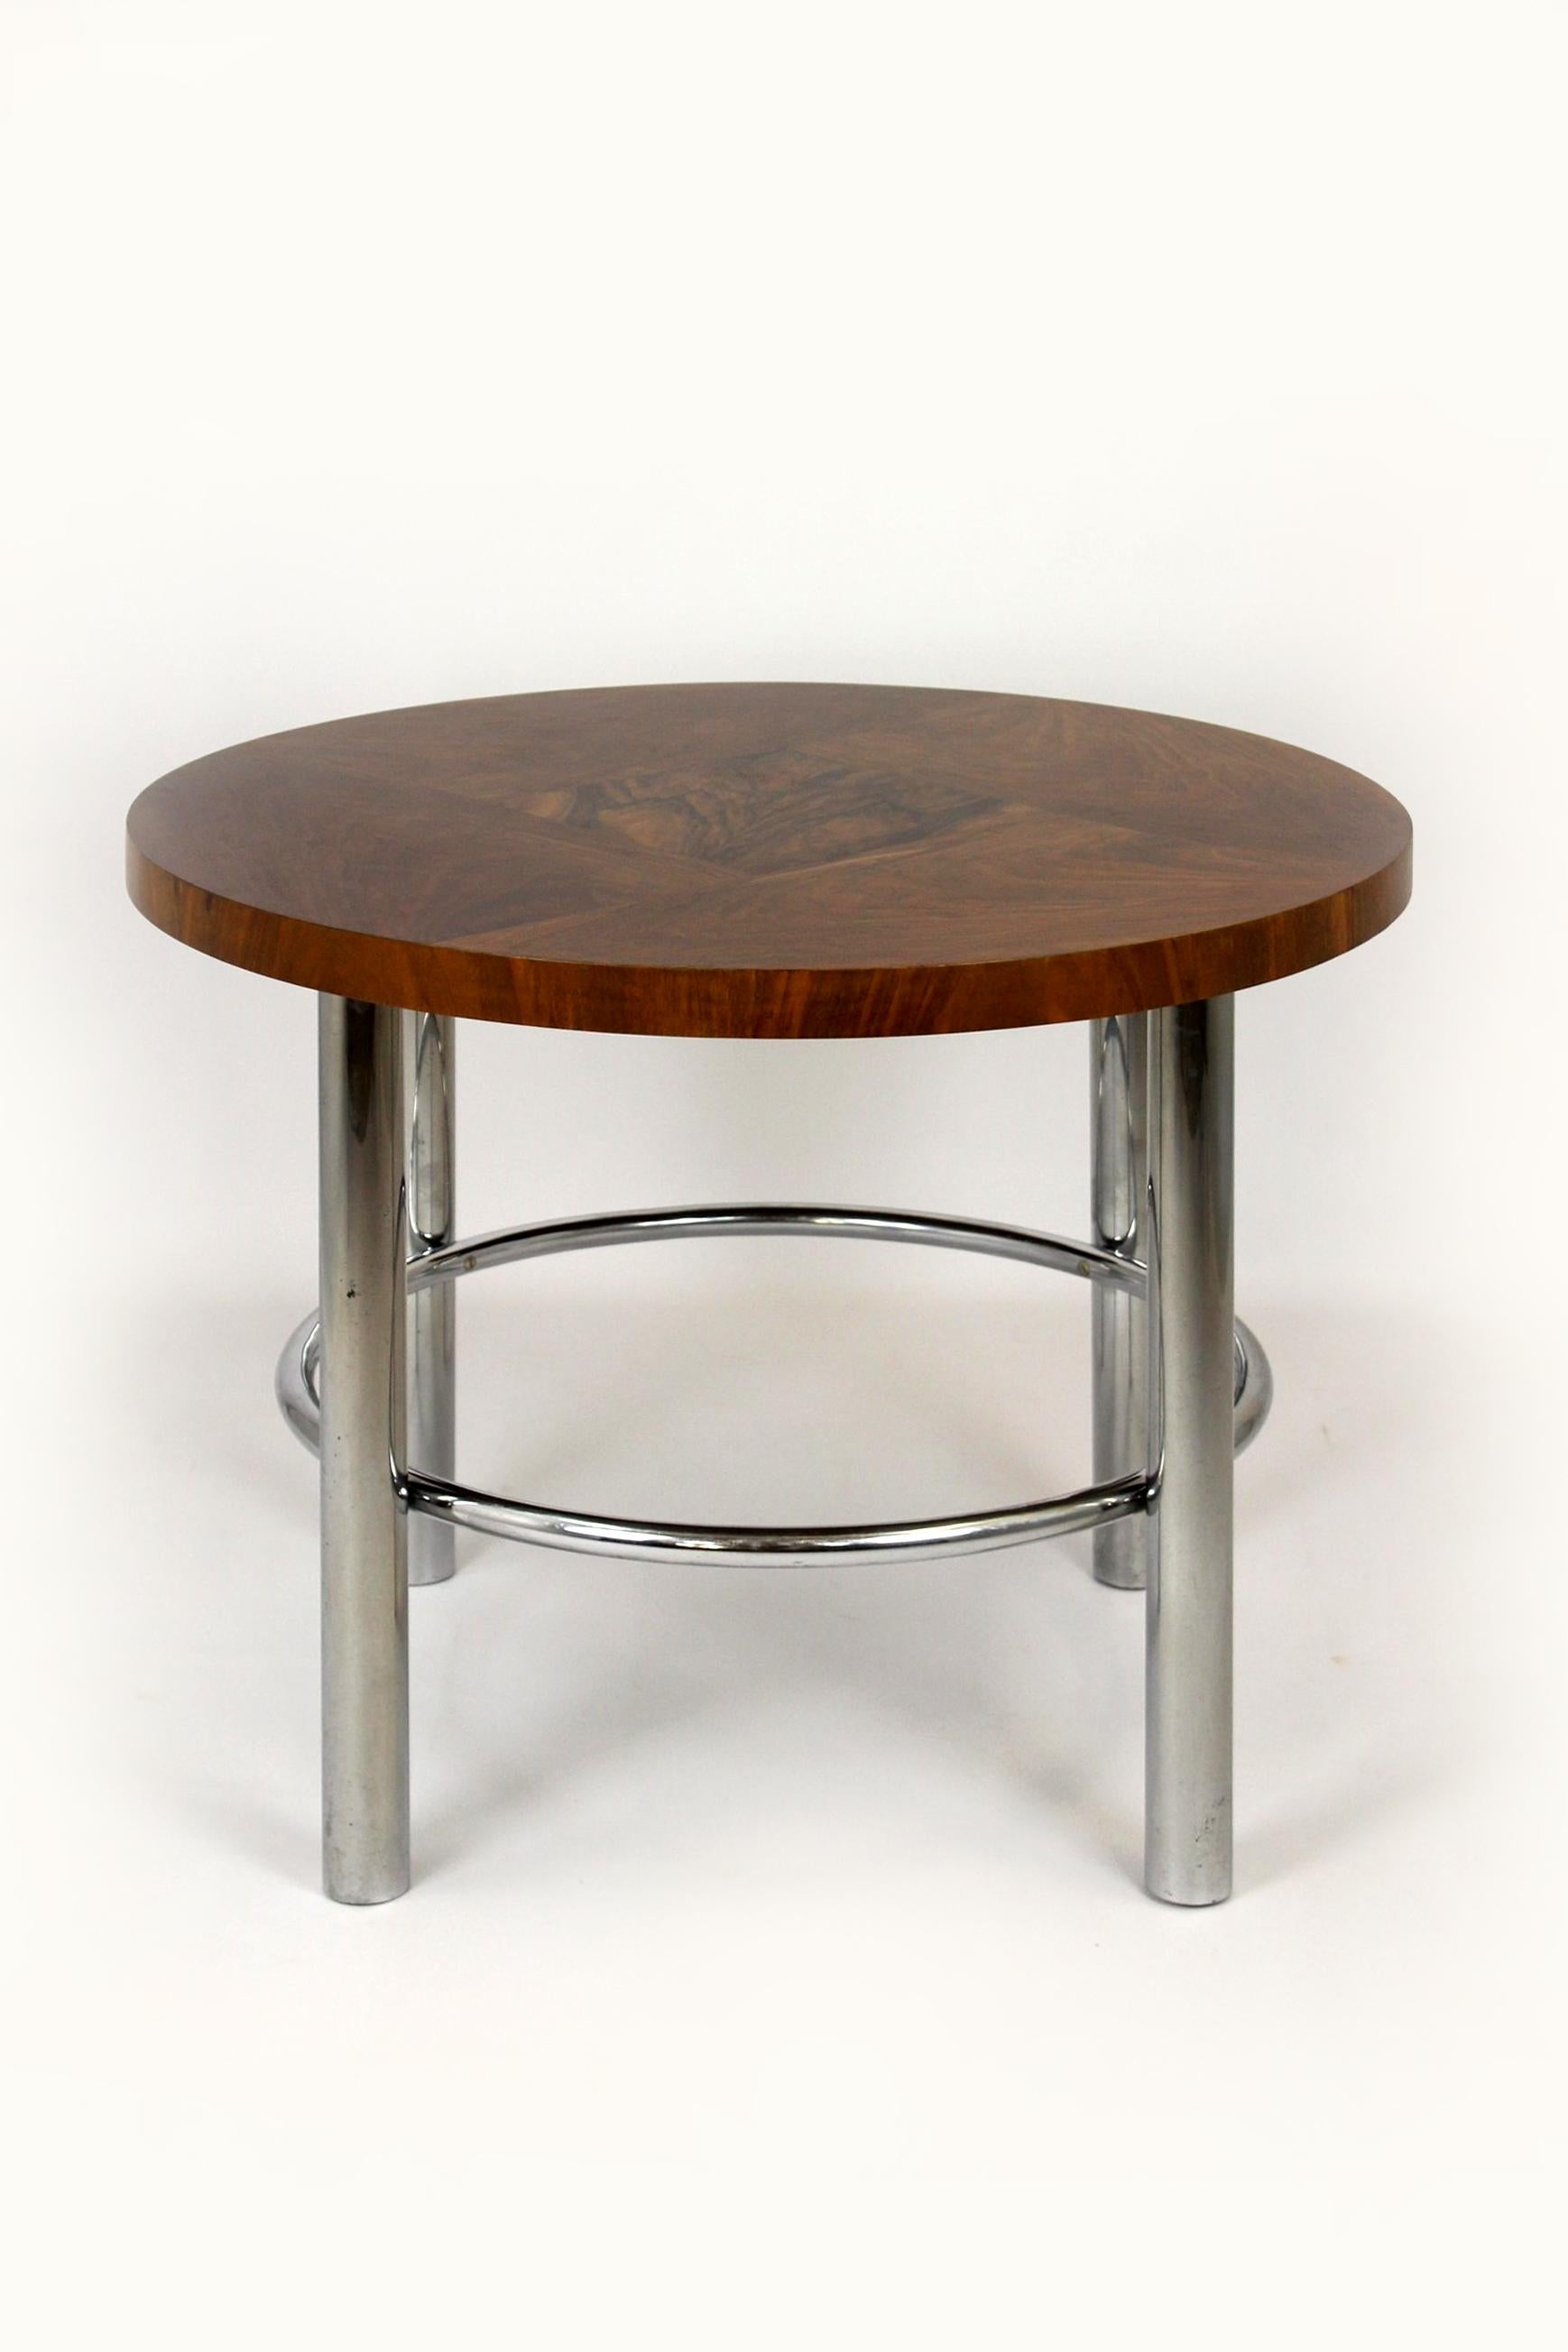 Bauhaus Round Table in Walnut by Robert Slezak, 1930s For Sale 2